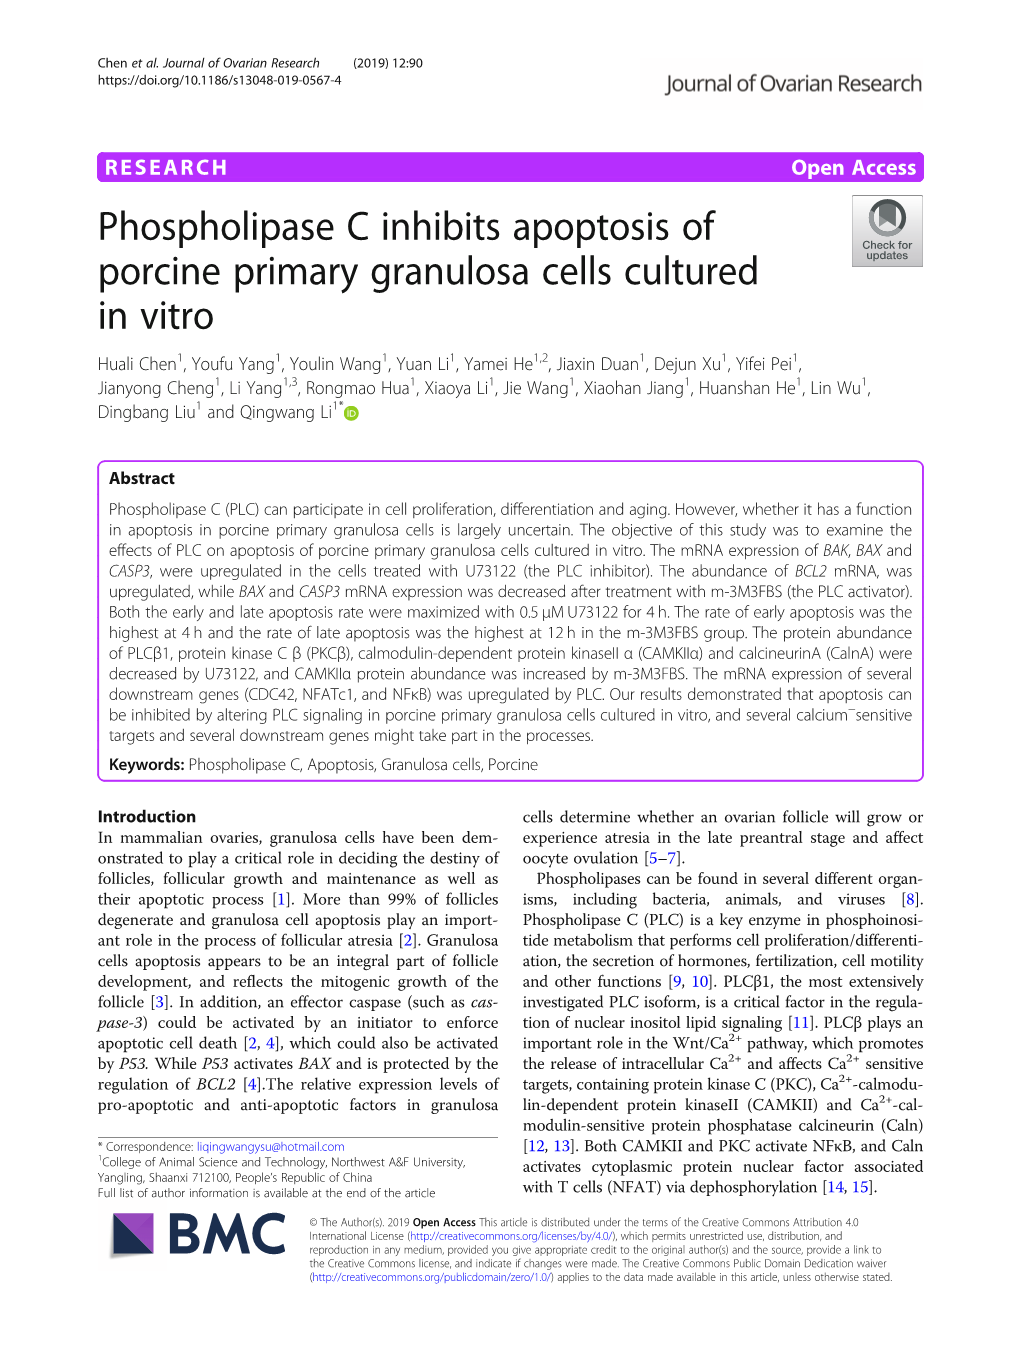 Phospholipase C Inhibits Apoptosis of Porcine Primary Granulosa Cells